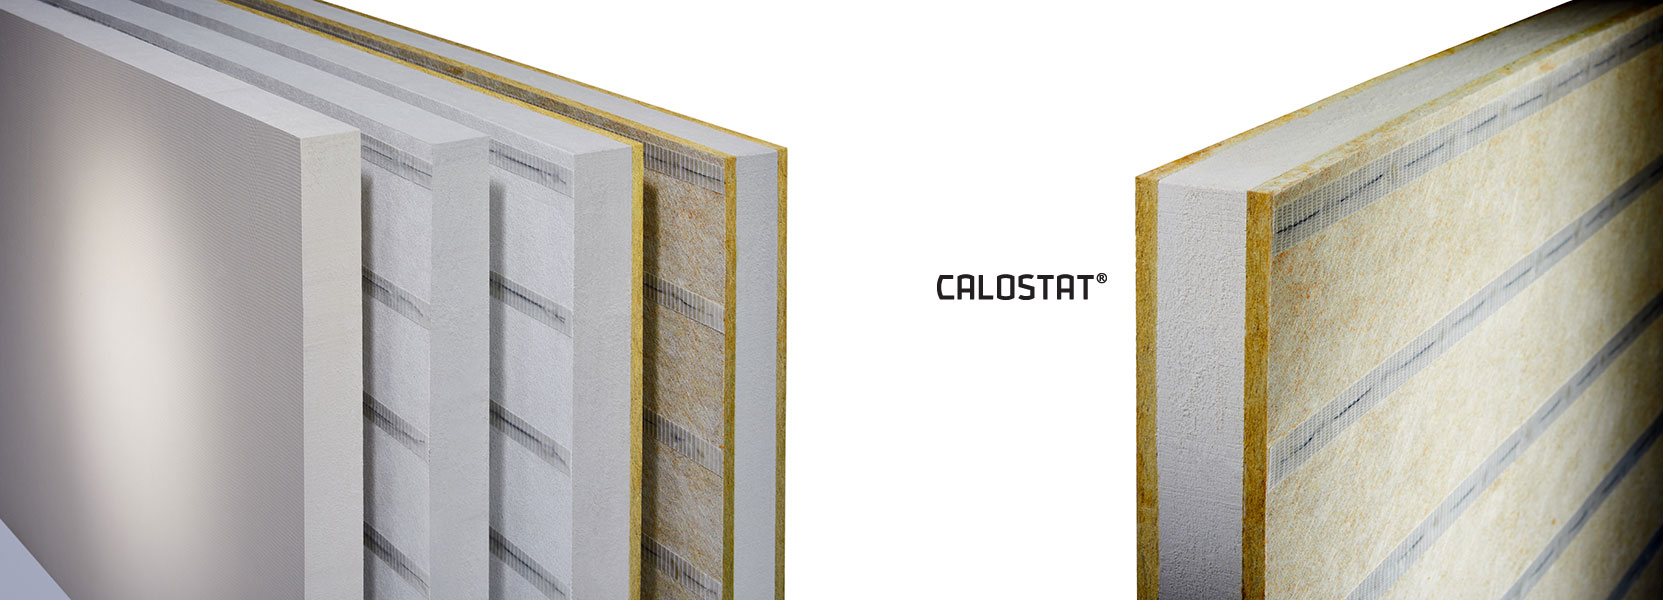 CALOSTAT® Insulation Panel Range and CALOSTAT® Sandwich MW